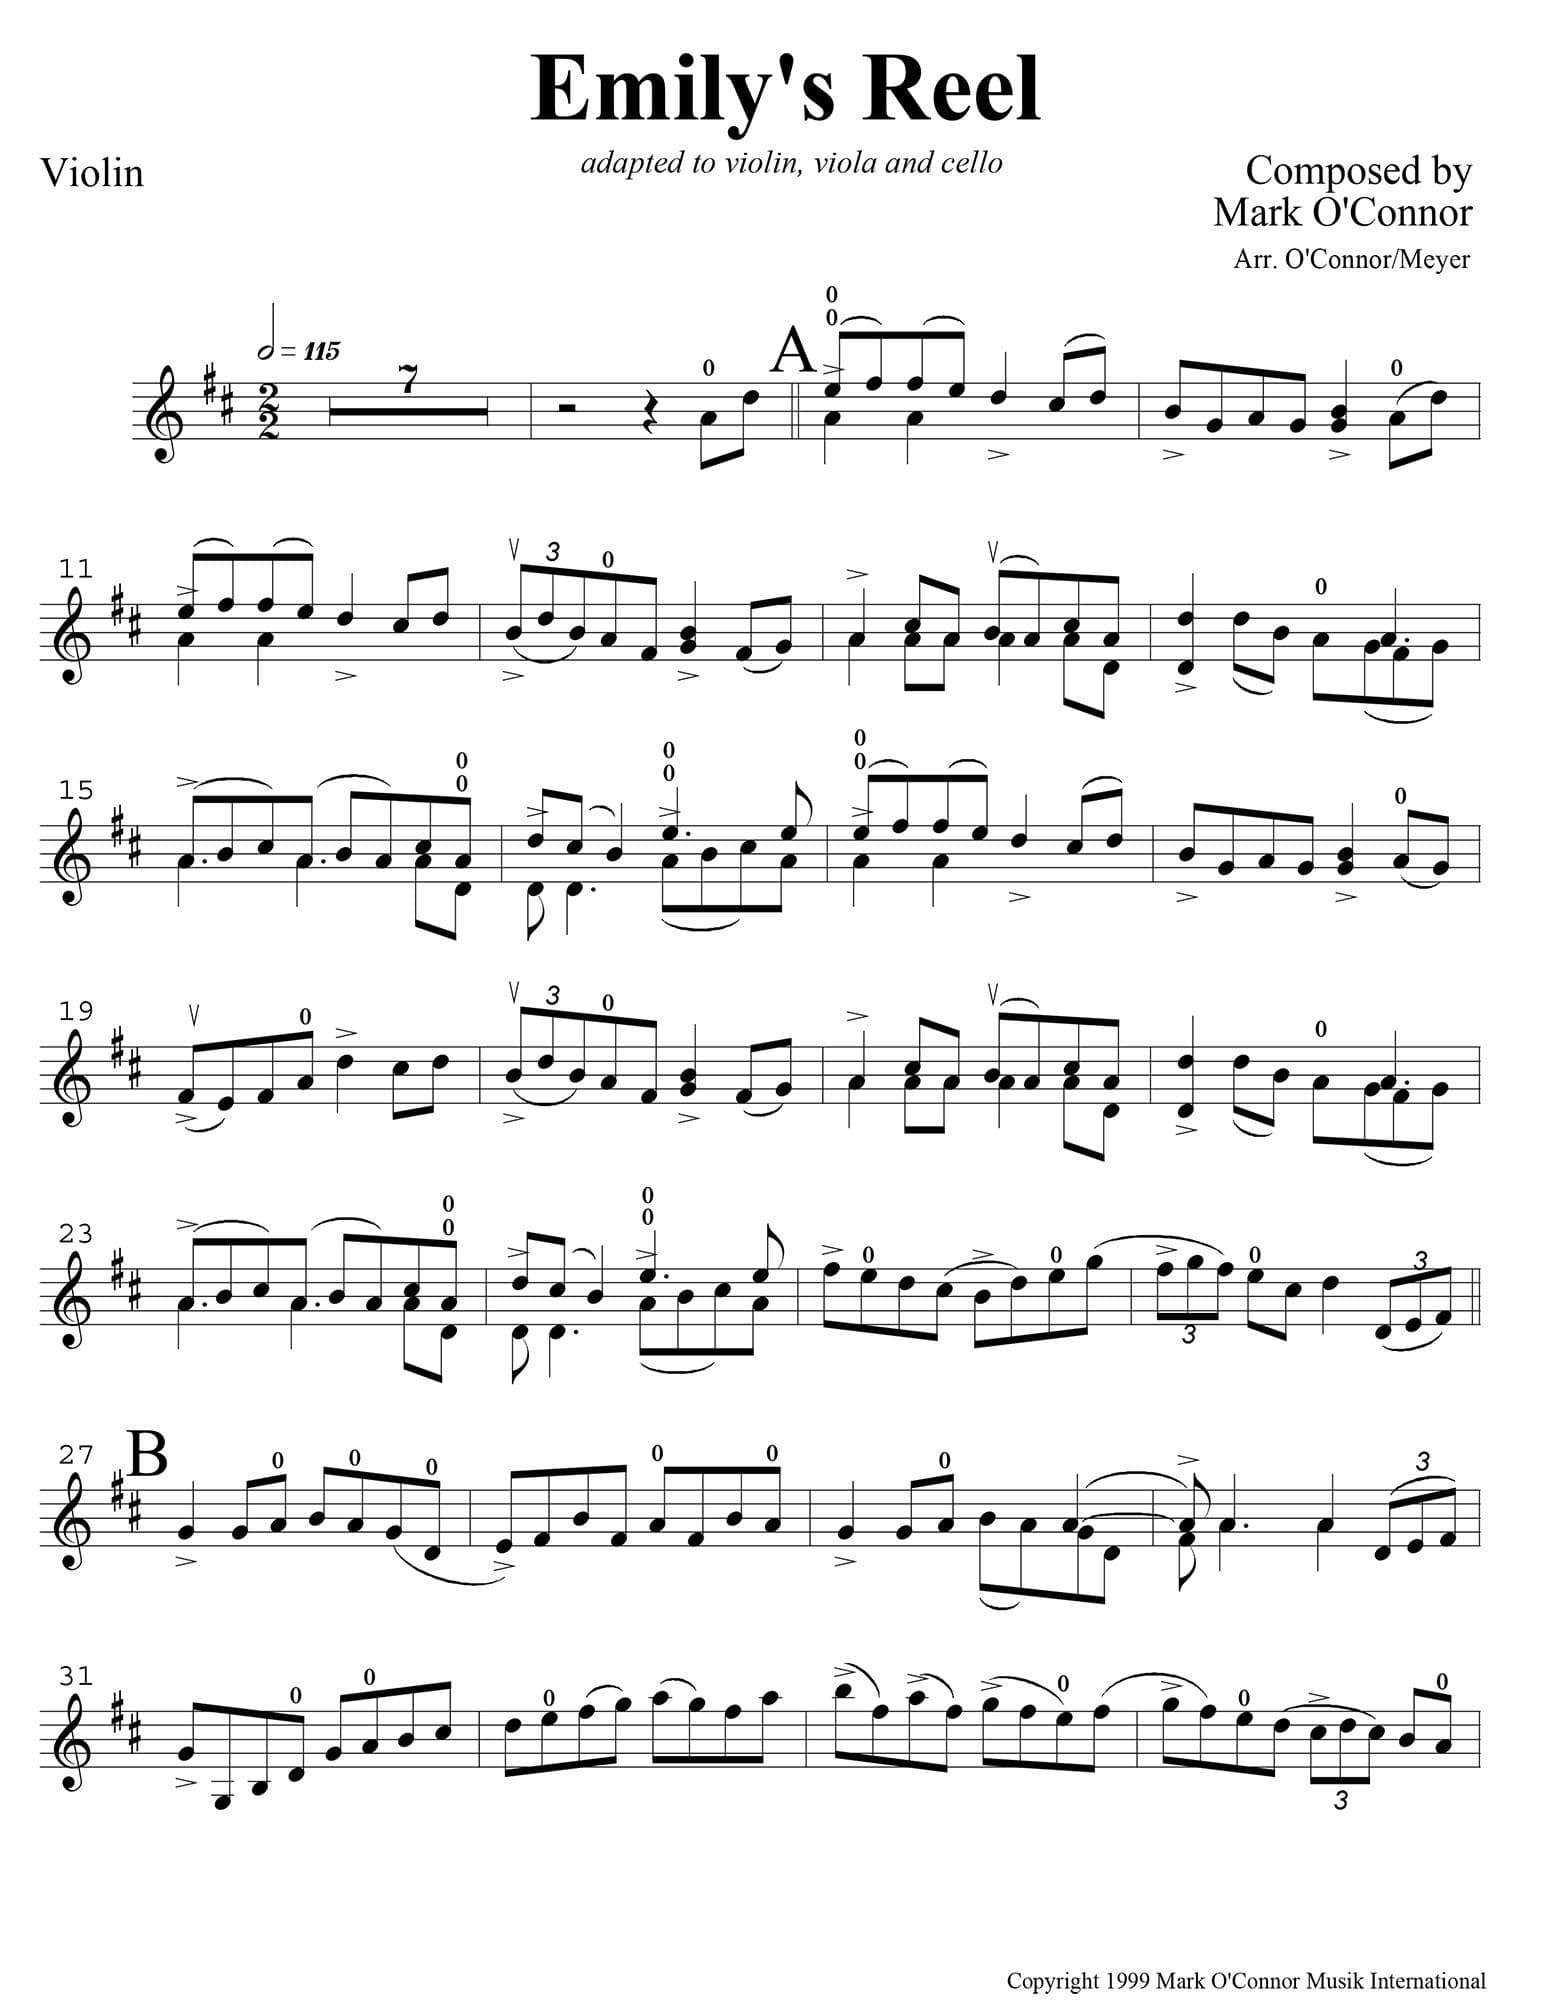 O'Connor, Mark - Emily's Reel for Violin, Viola, and Cello - Violin - Digital Download